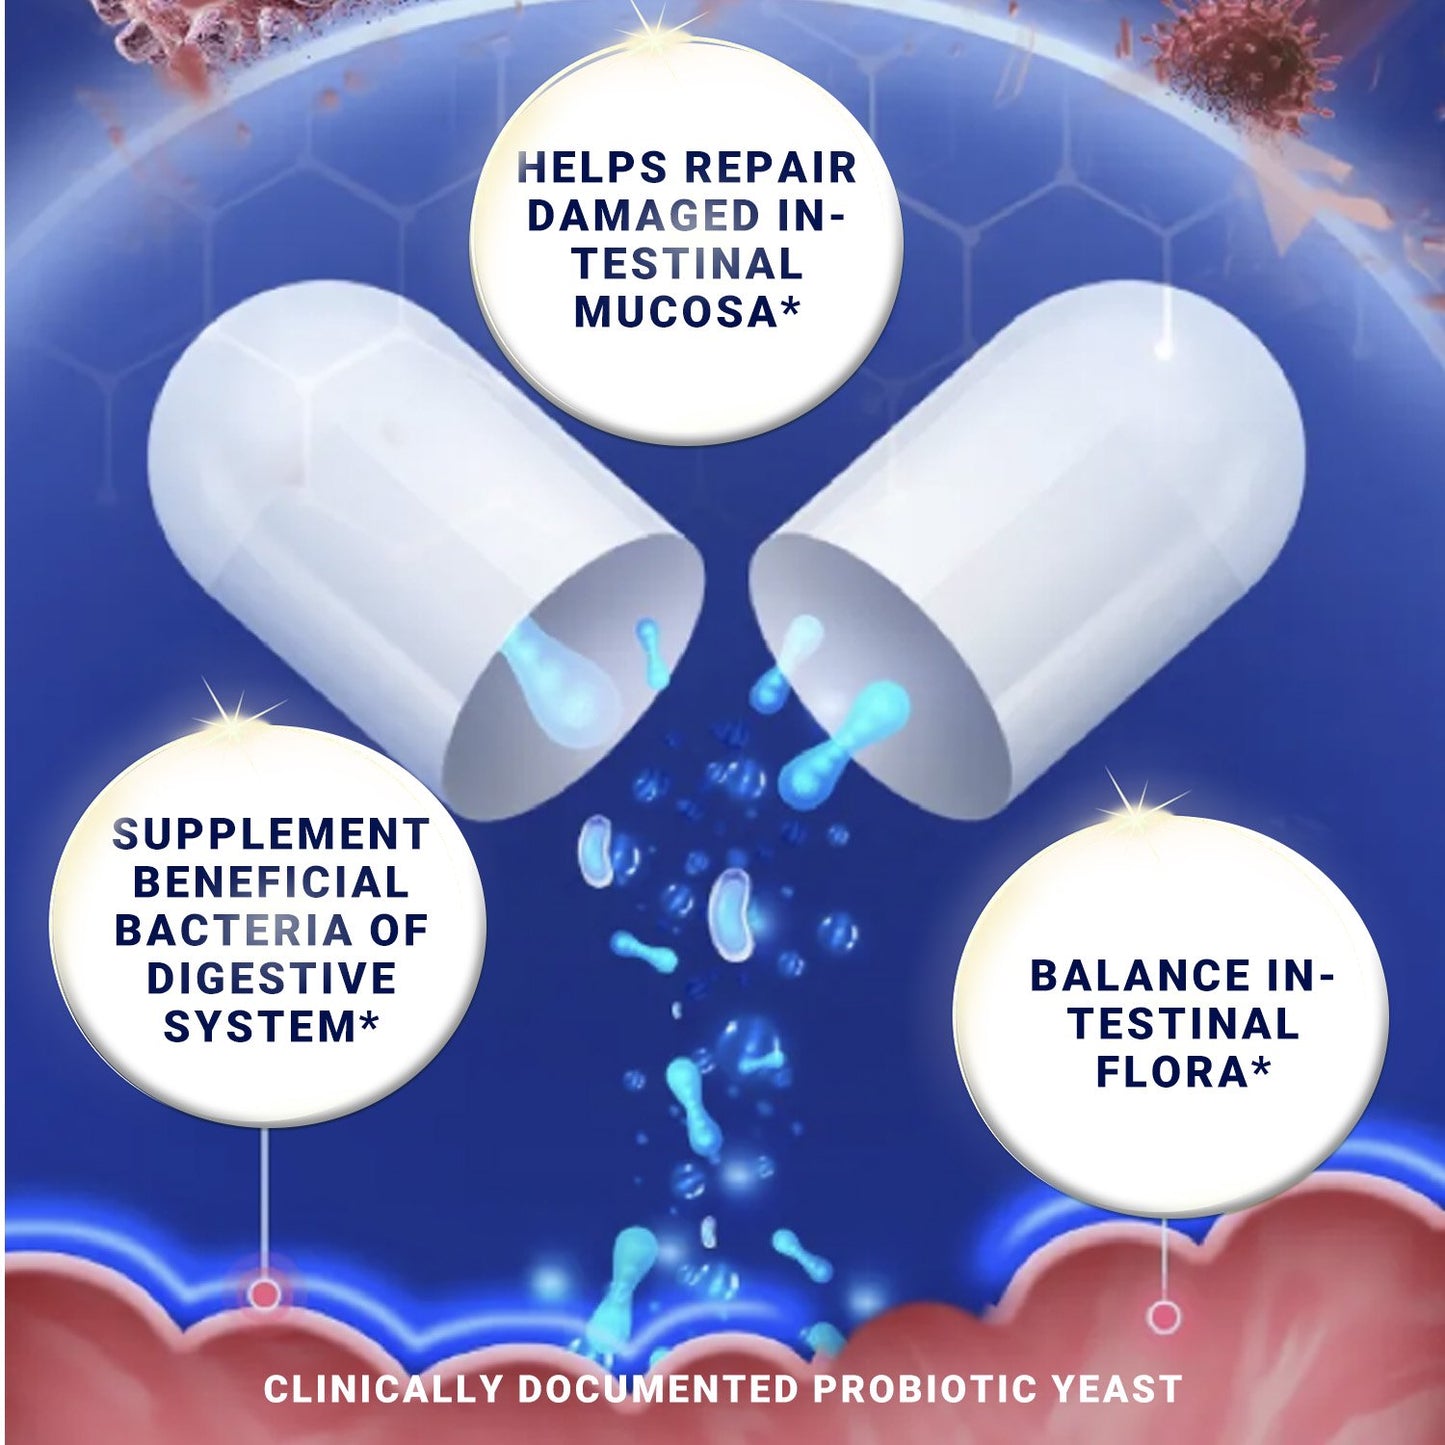 Saccharomyces Boulardii 5 Billion CFU Plus MOS Yeast Fraction- Probioticss & Prebiotic Supplement